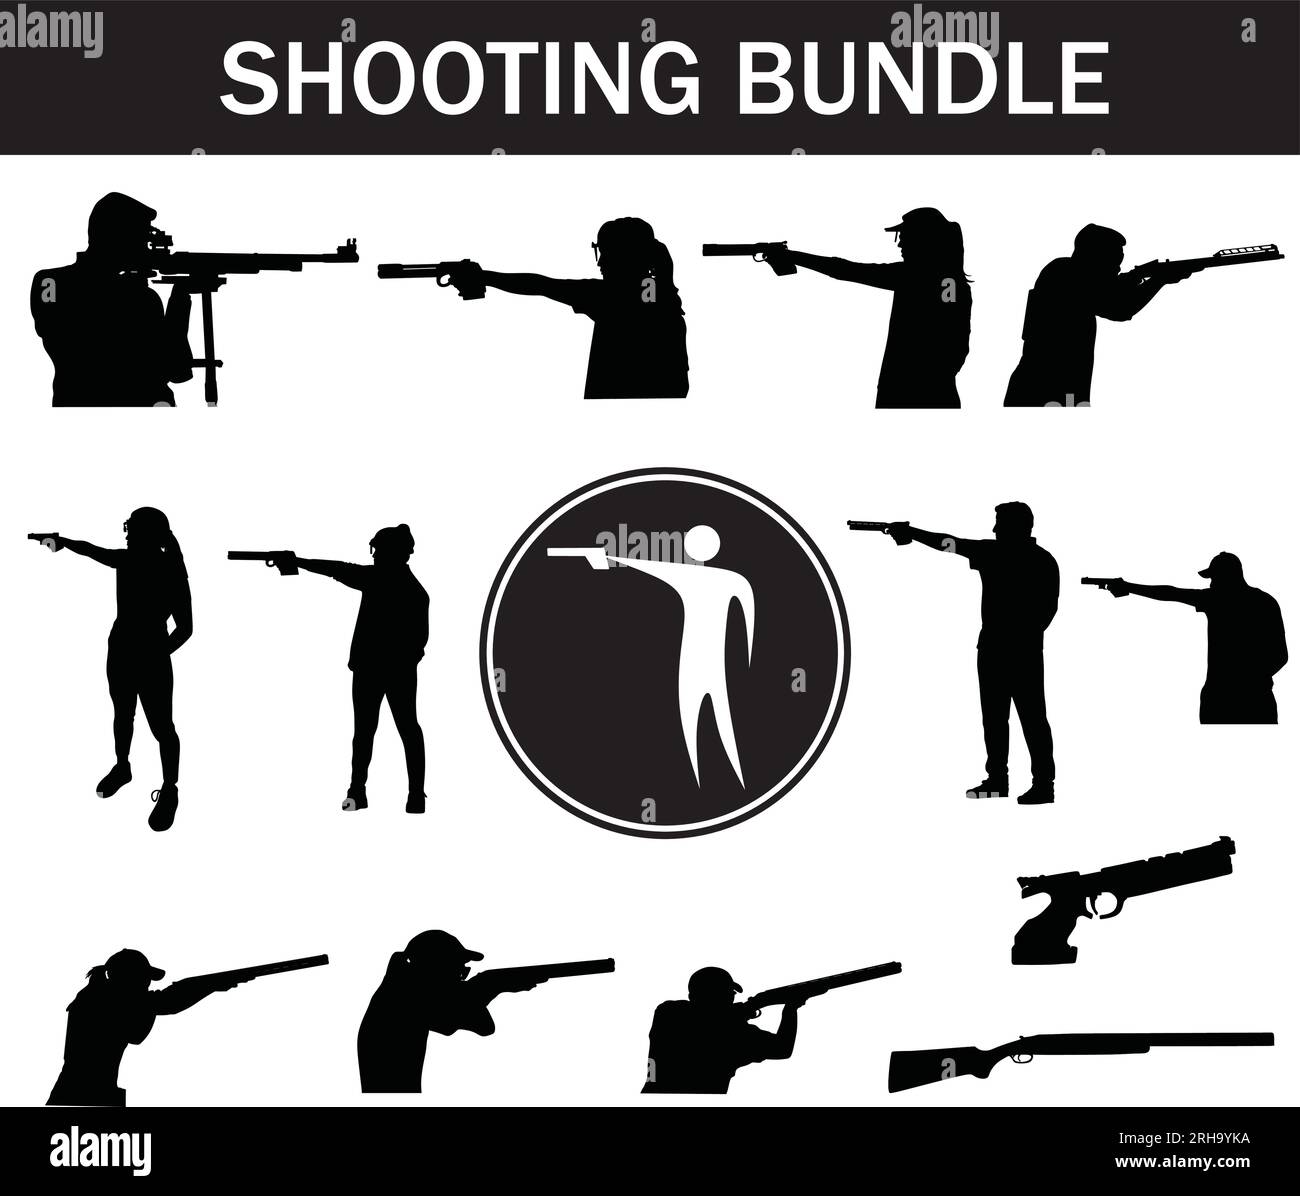 Shooting Silhouette Bundle | Kollektion von Shooting Playern mit Logo und Shooting Equipment Stock Vektor